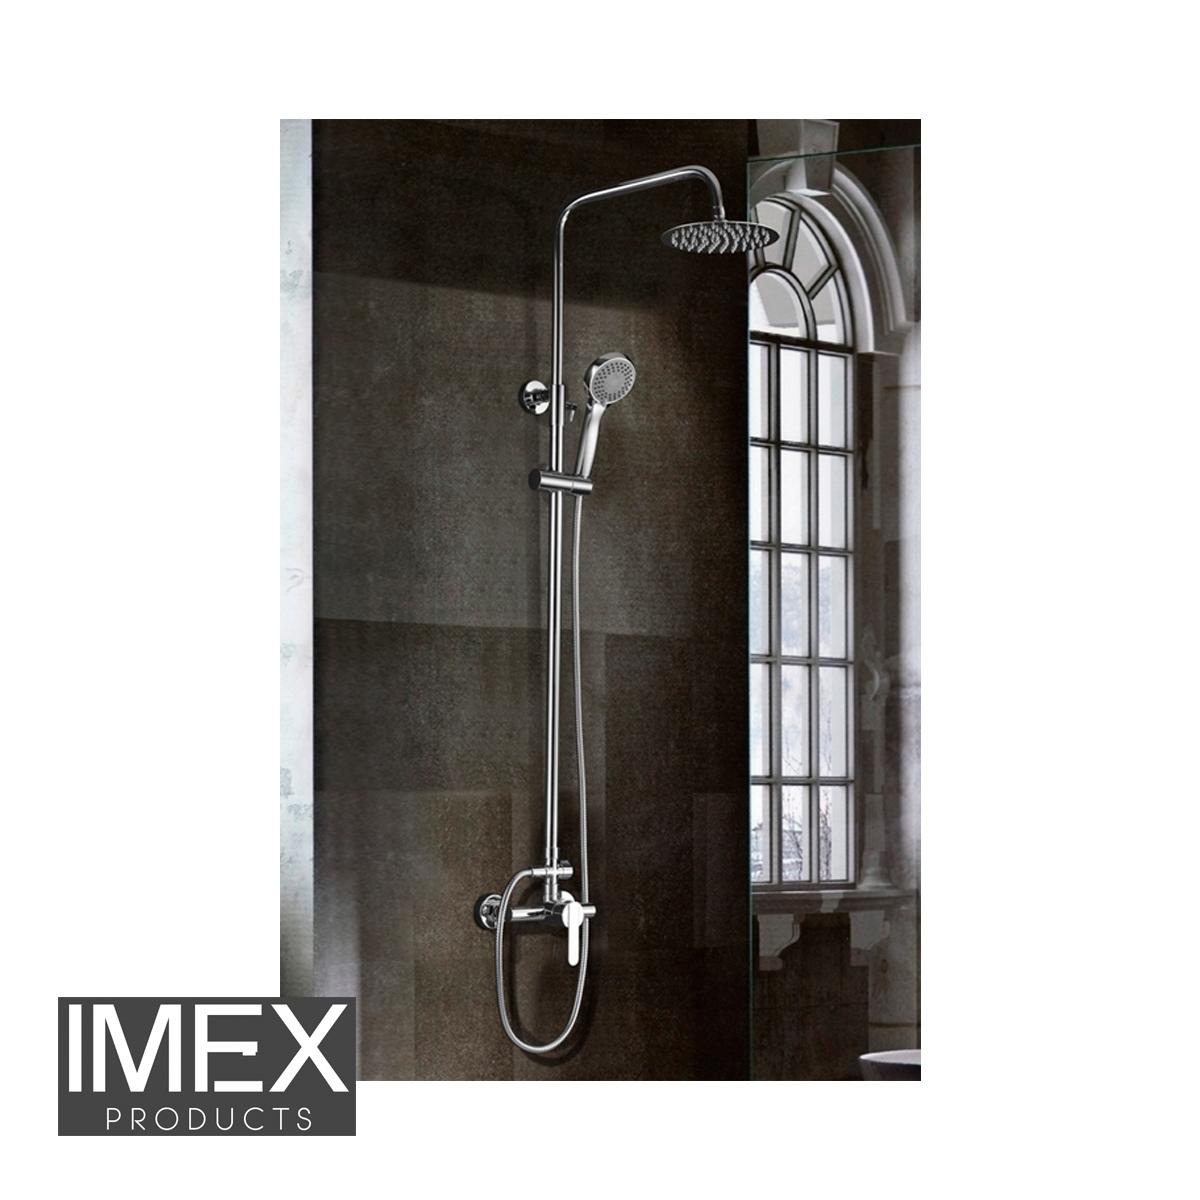 Columna de ducha Monomando IMEX ROMA Cromo BDR001